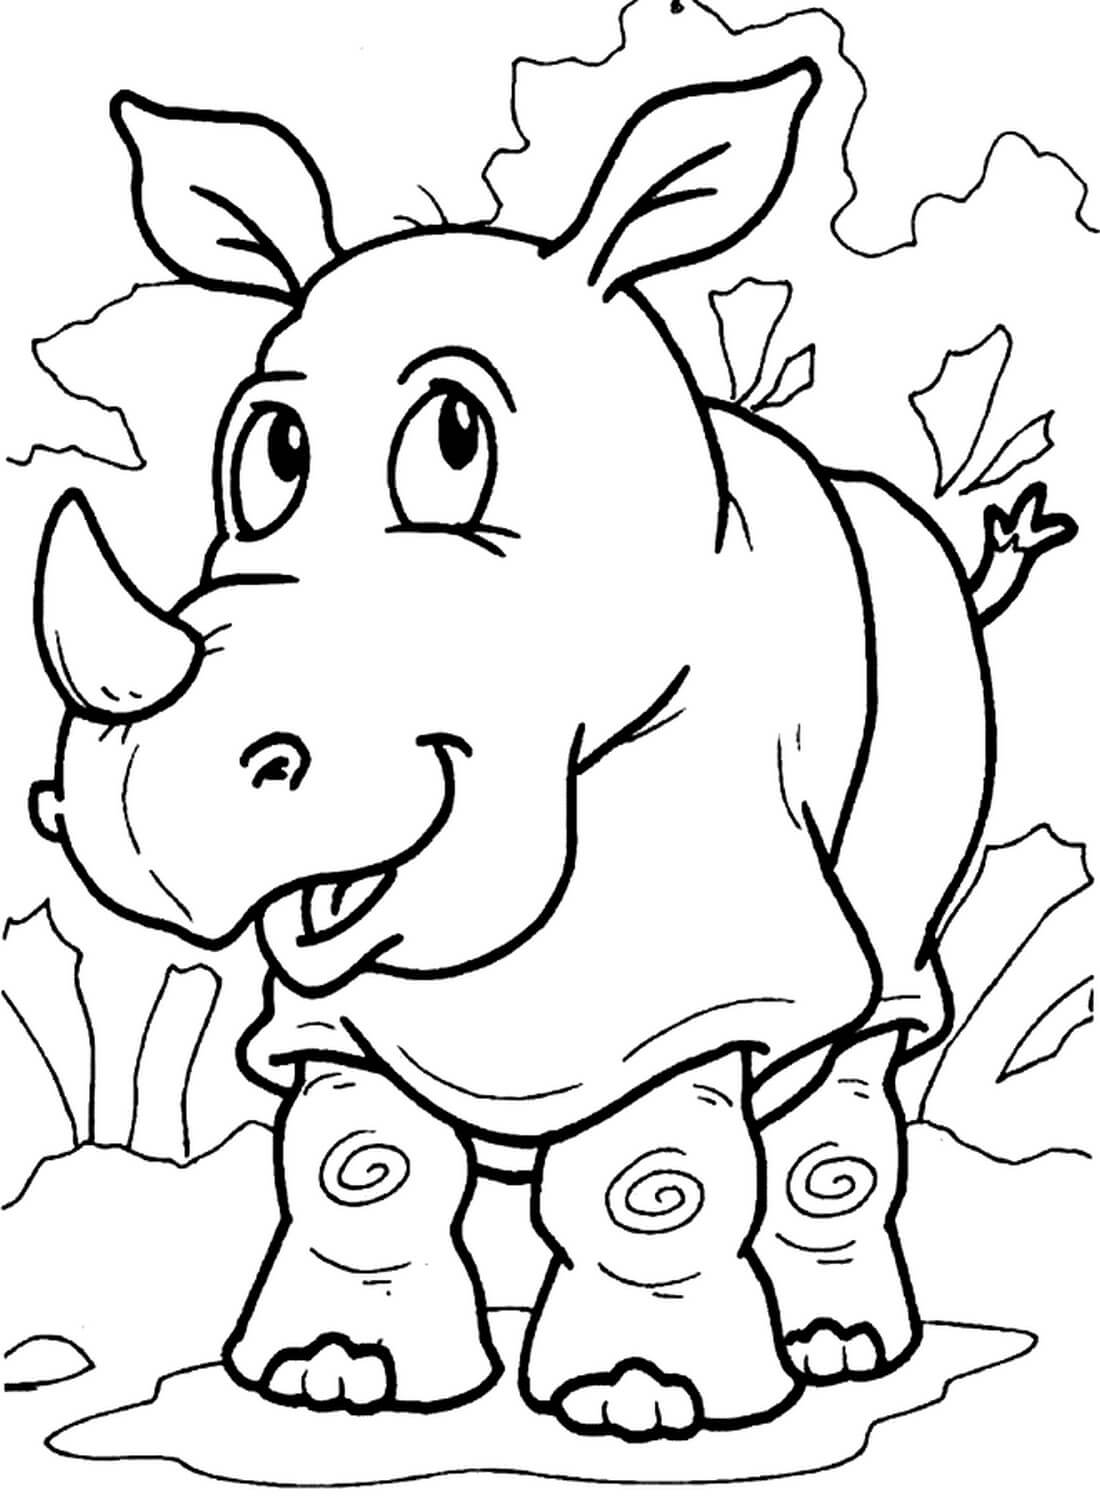 Раскраска Улыбчивый носорог